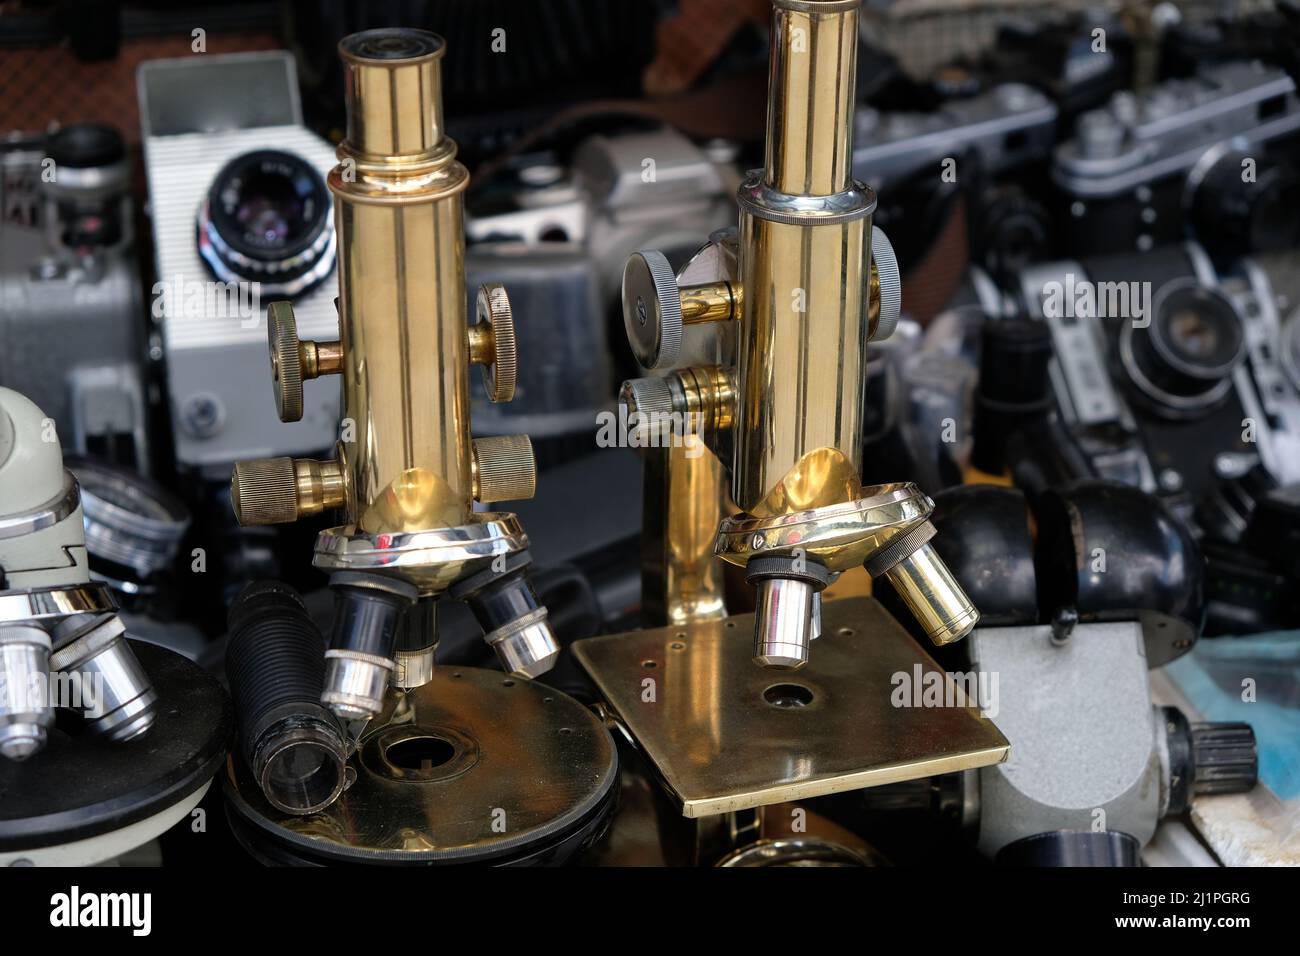 Vintage microscopes in the flea market Stock Photo